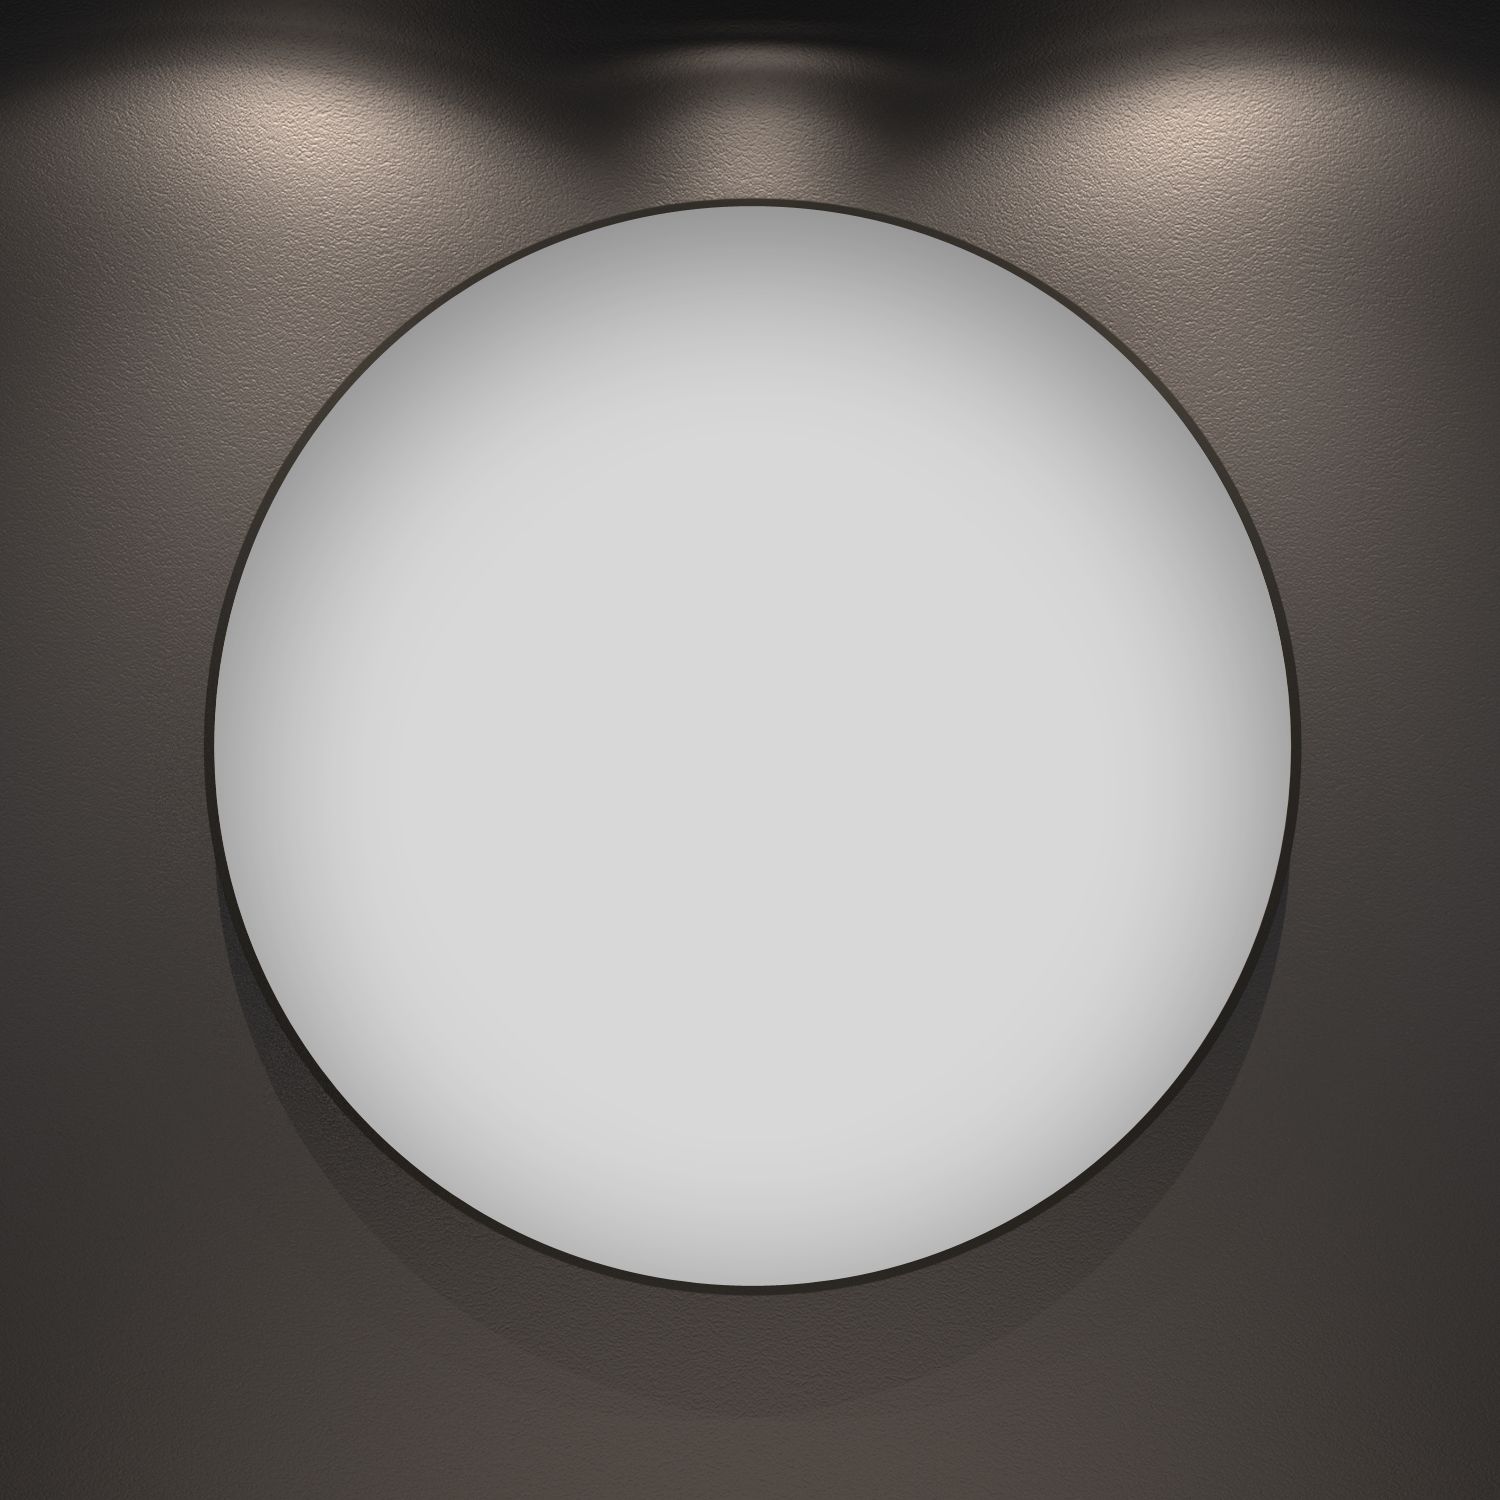 Влагостойкое круглое зеркало Wellsee 7 Rays' Spectrum 172201750, диаметр 55 см